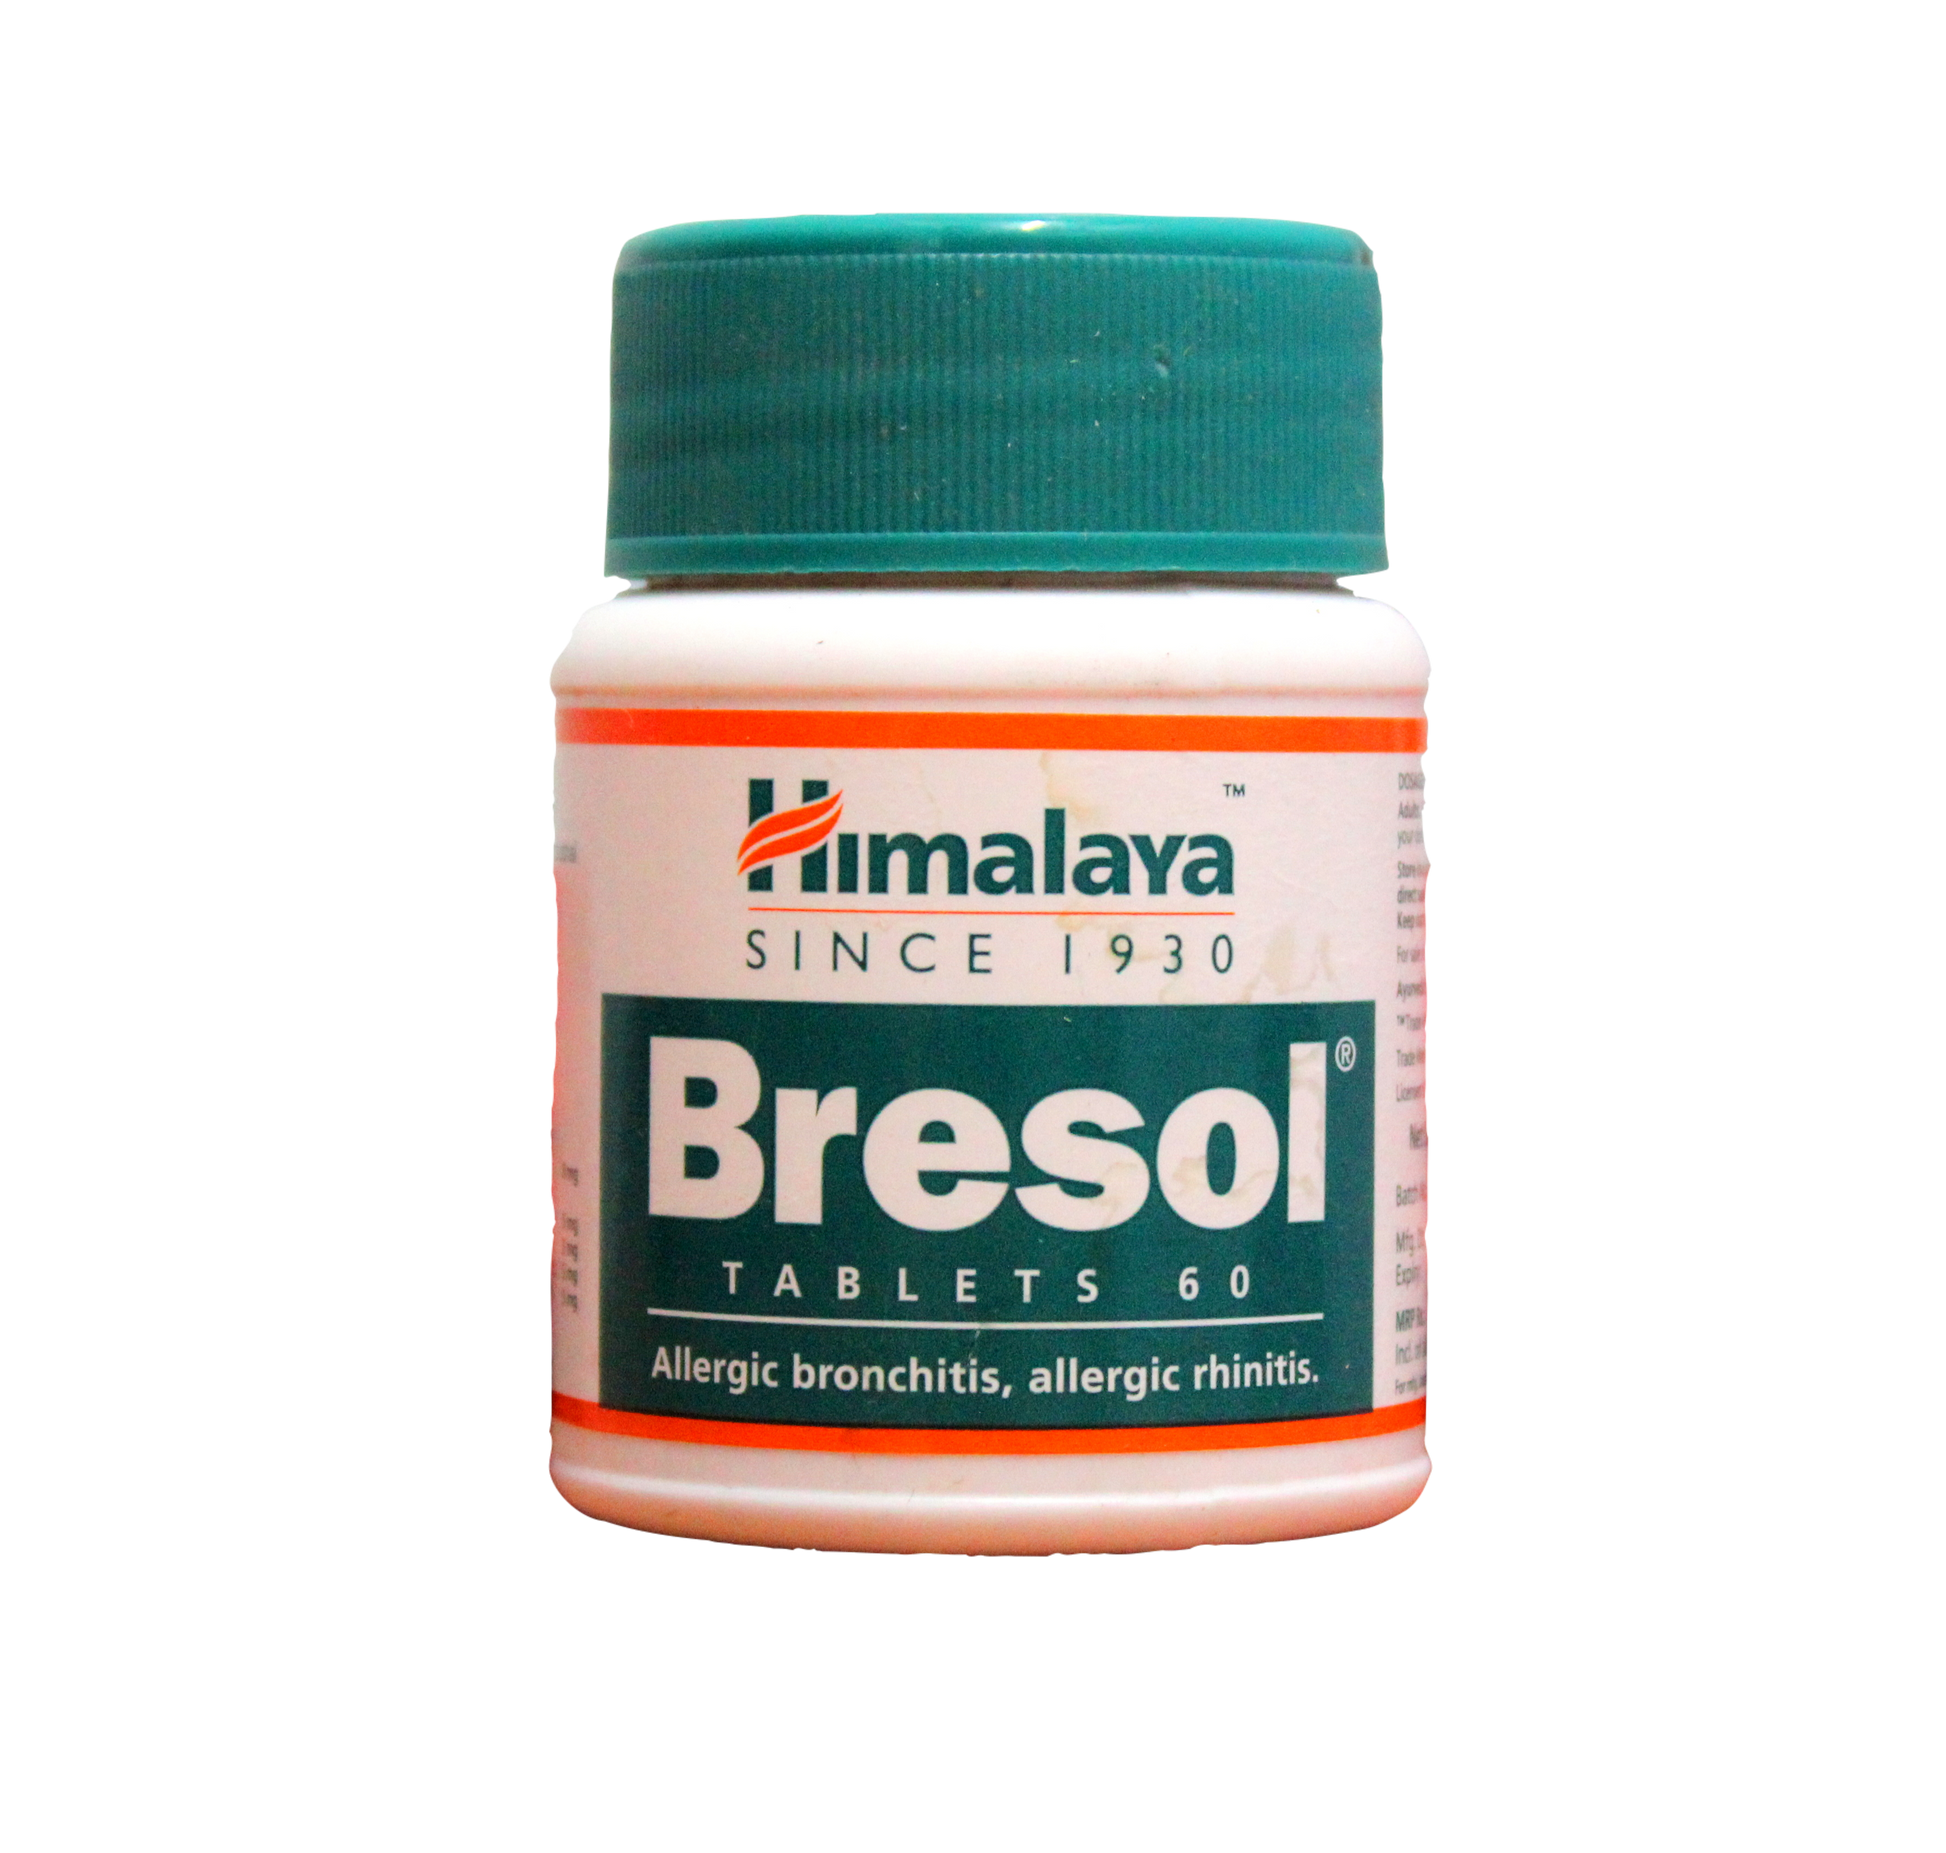 Bresol tablets - 60tablets -  Himalaya - Medizzo.com